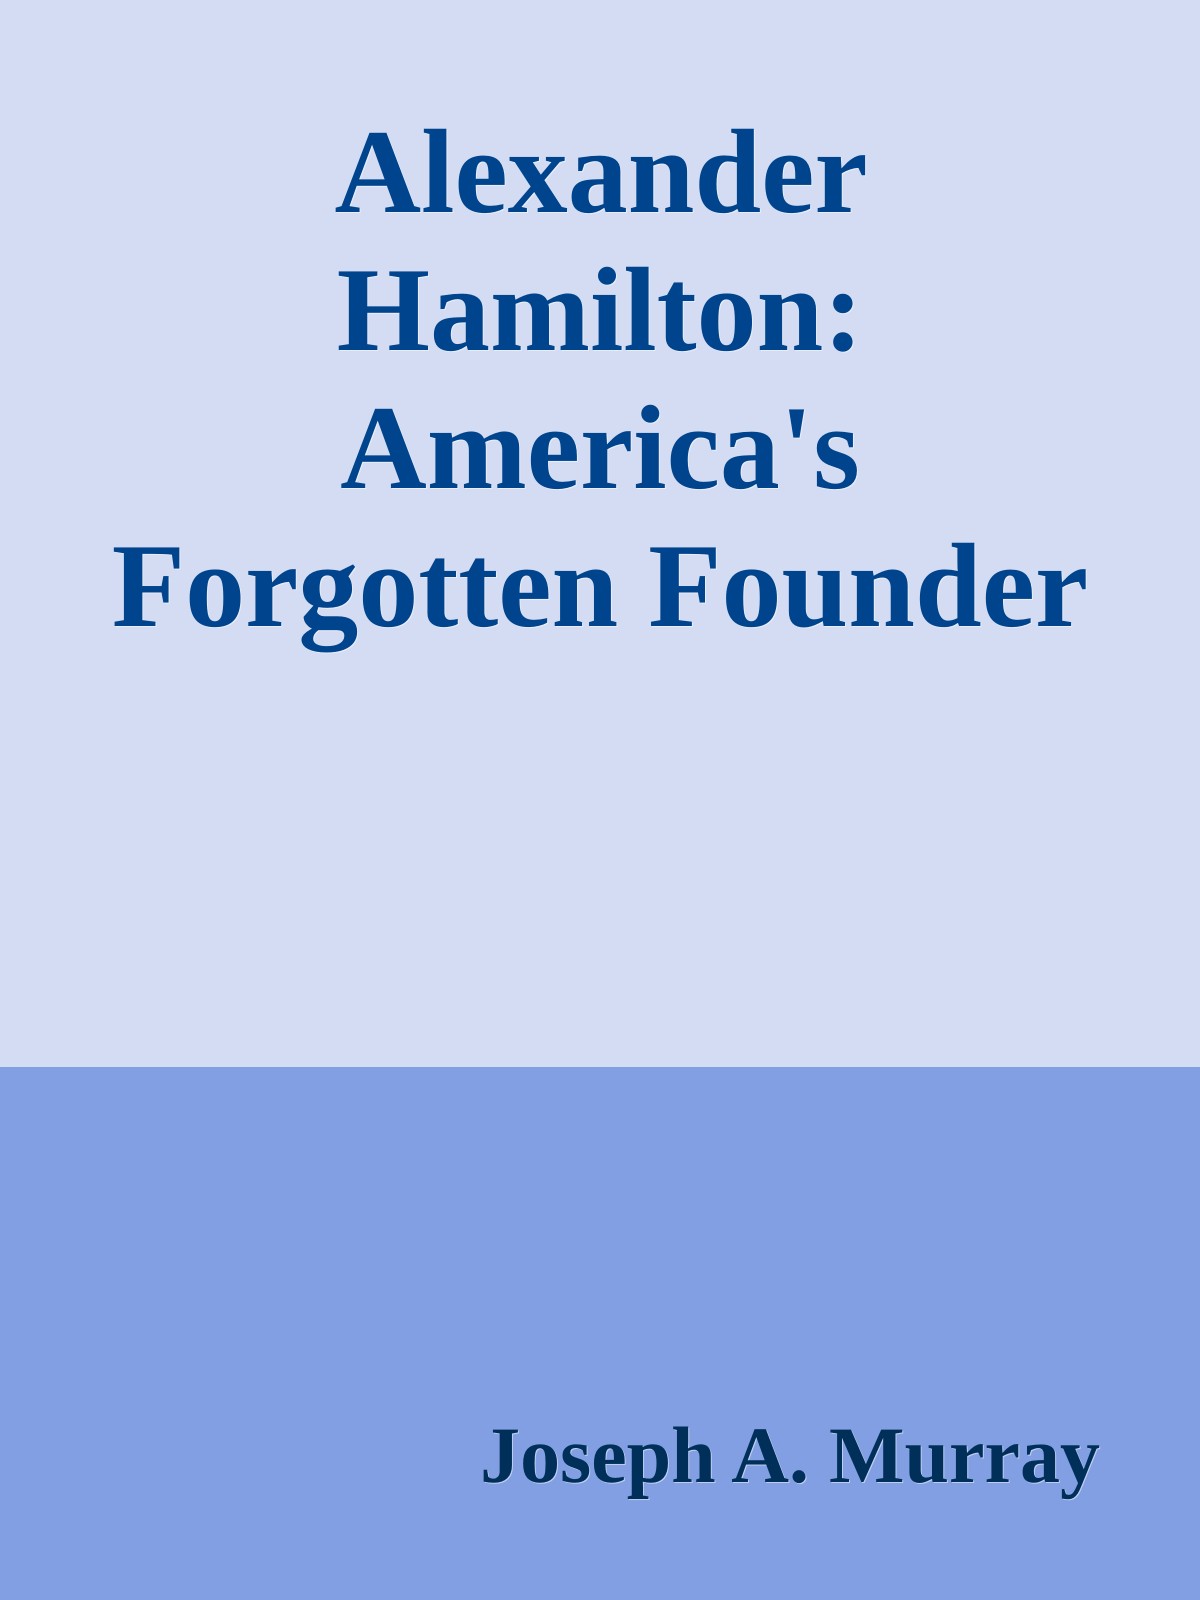 Alexander Hamilton: America's Forgotten Founder